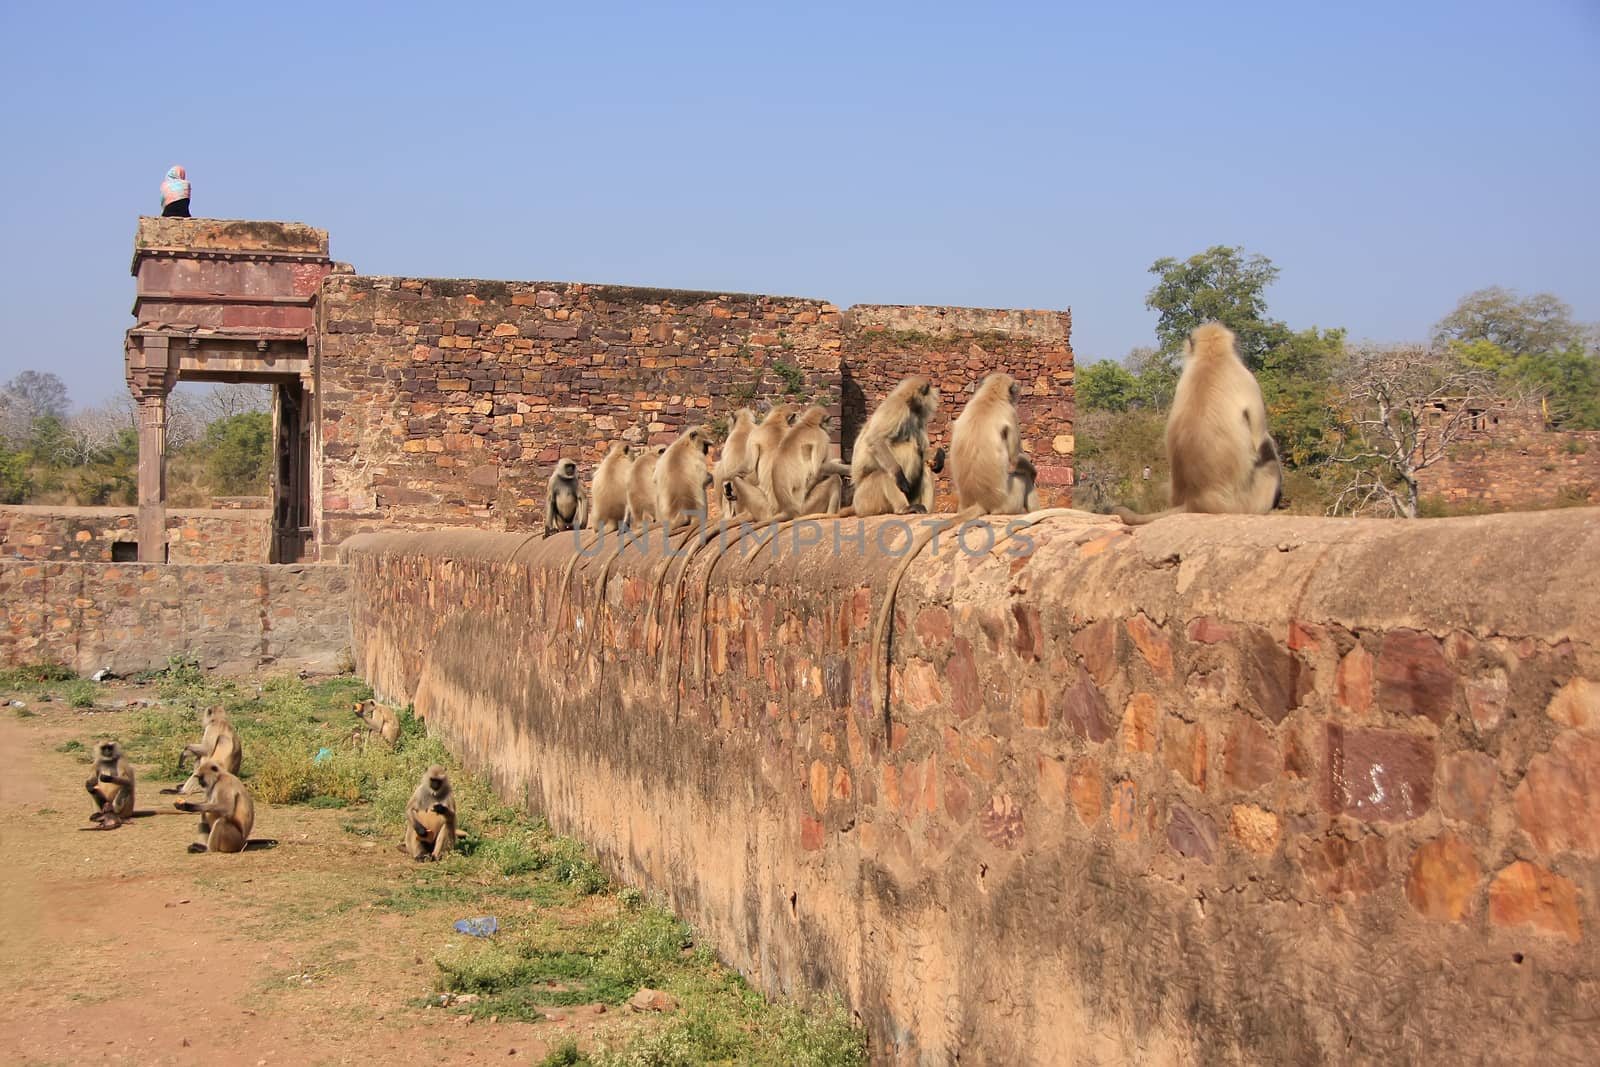 Gray langurs (Semnopithecus dussumieri) sitting at Ranthambore Fort, Rajasthan, India